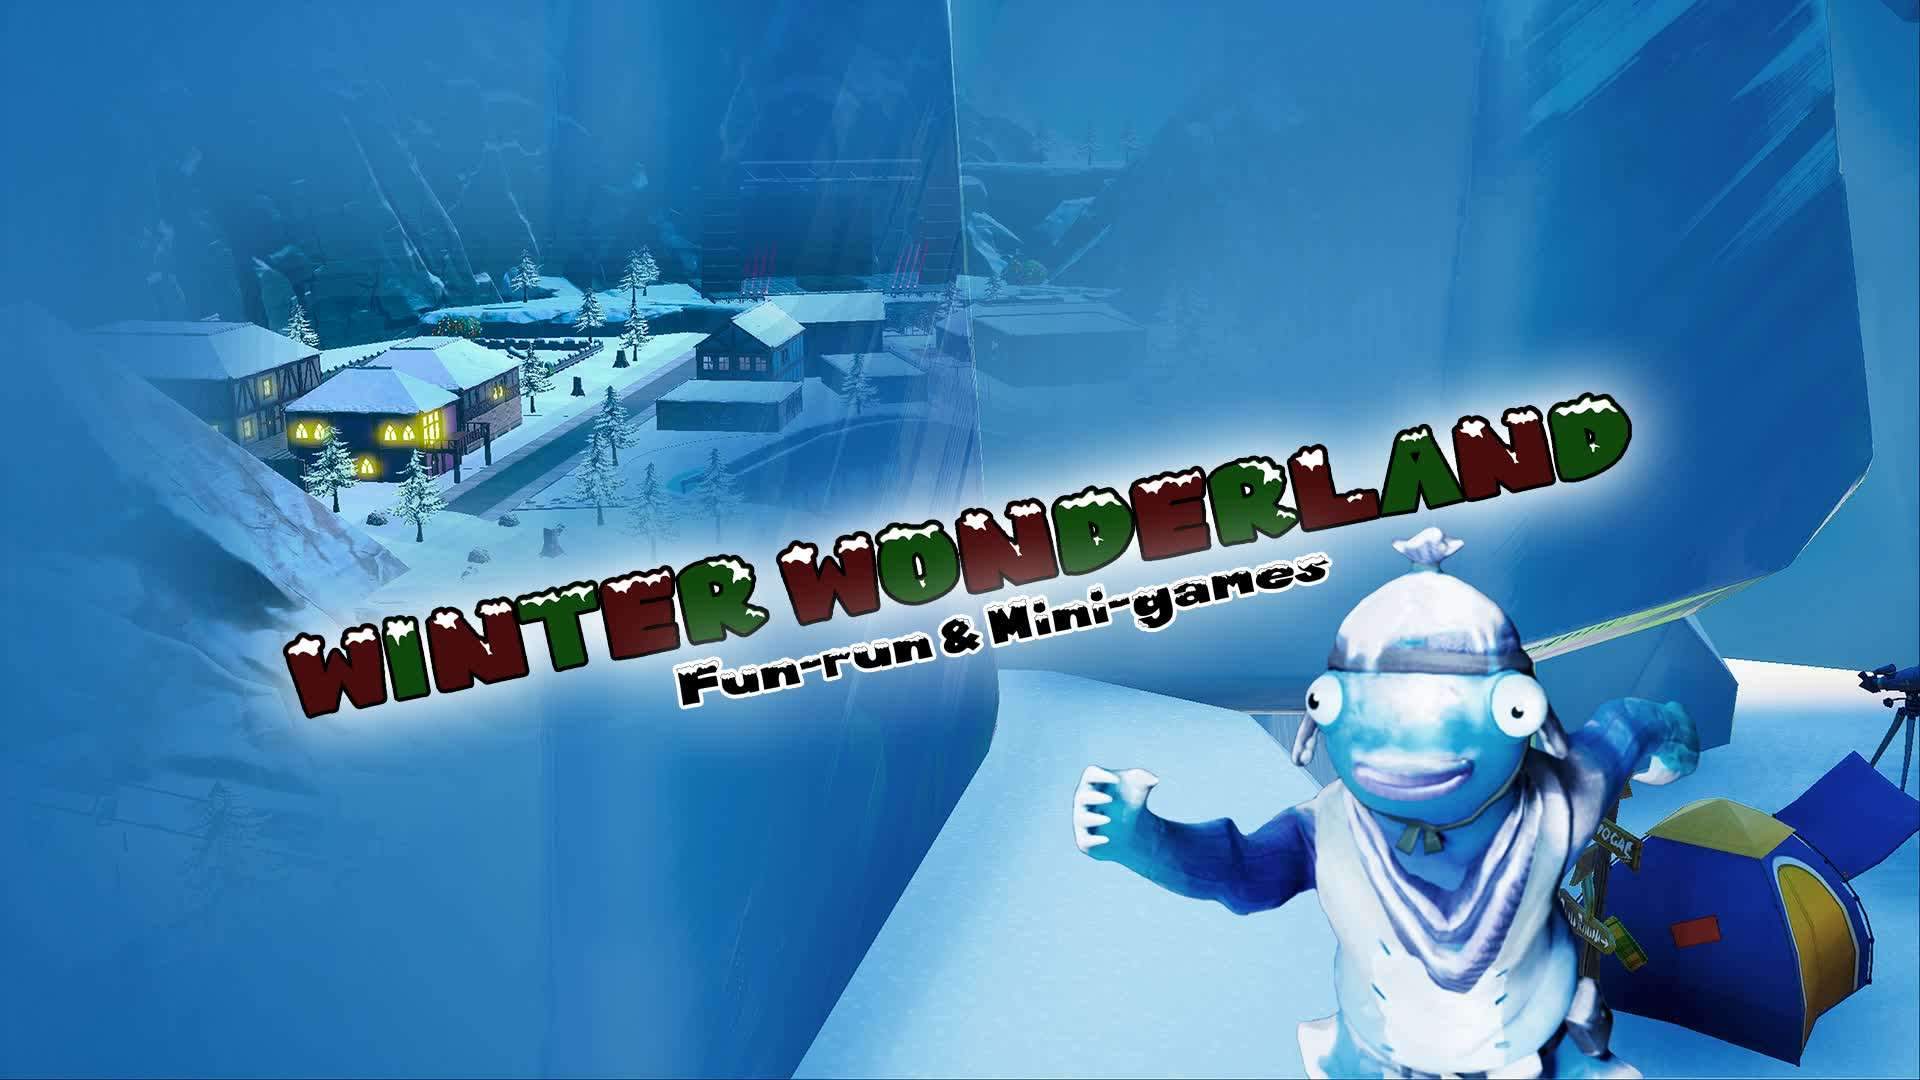 Winter Wonderland (Fun-run & Mini-games)